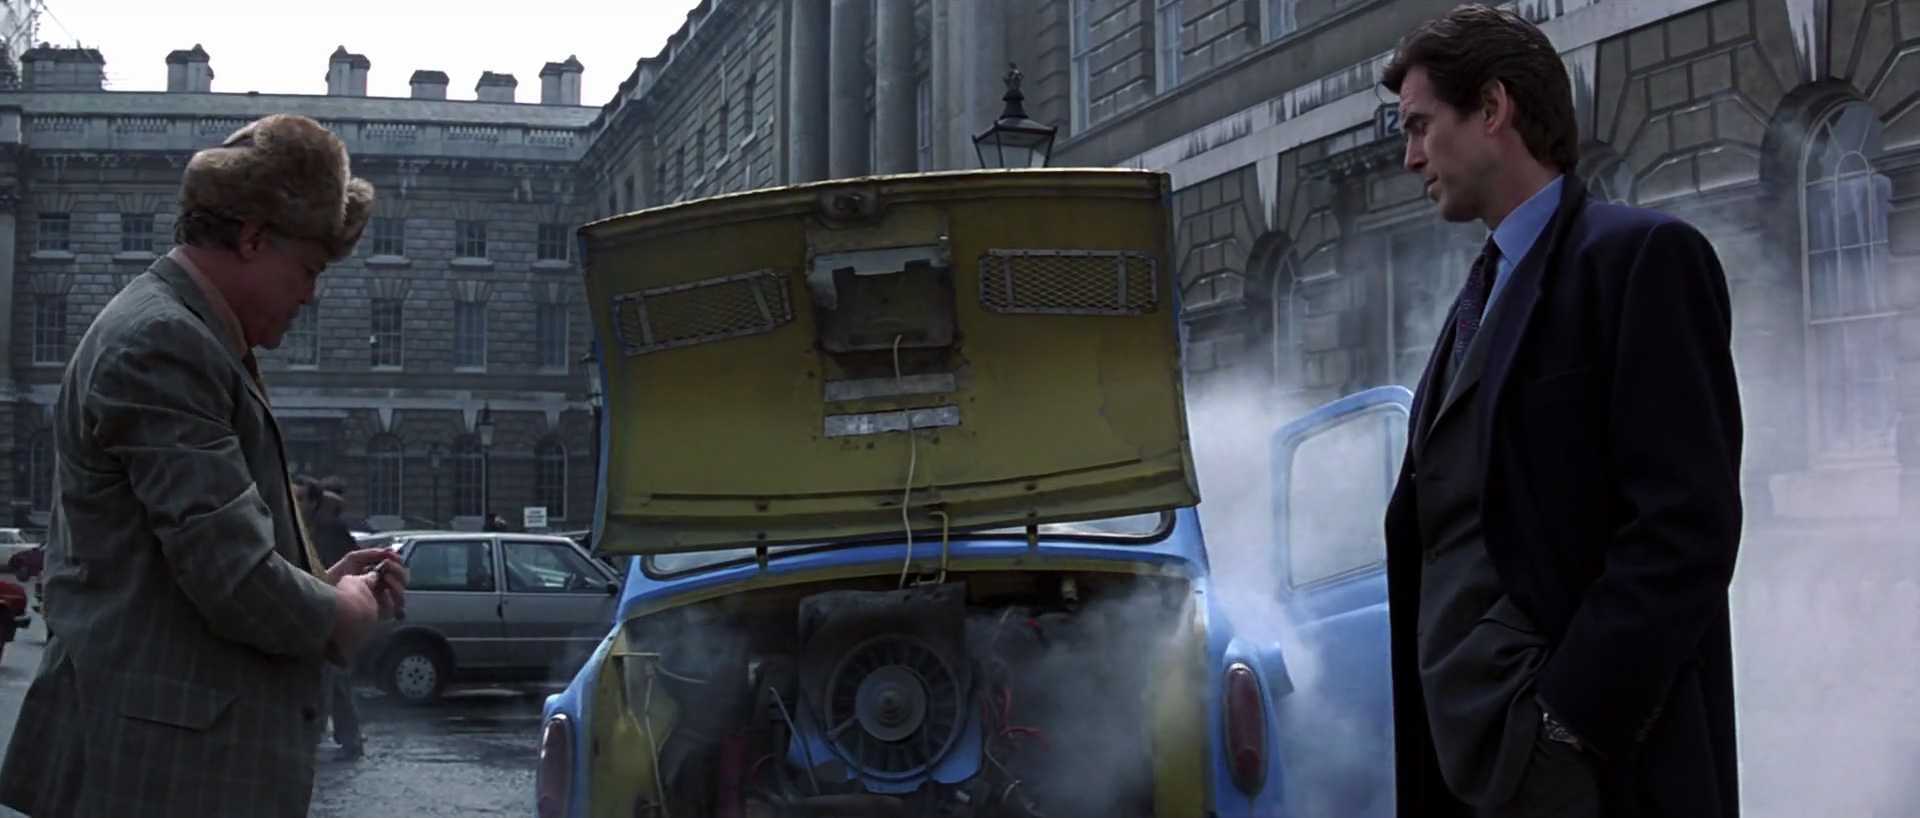 Легендарные агенты. Goldeneye 007 1995 авто. Бонд в Москве Запорожец Кувалда.